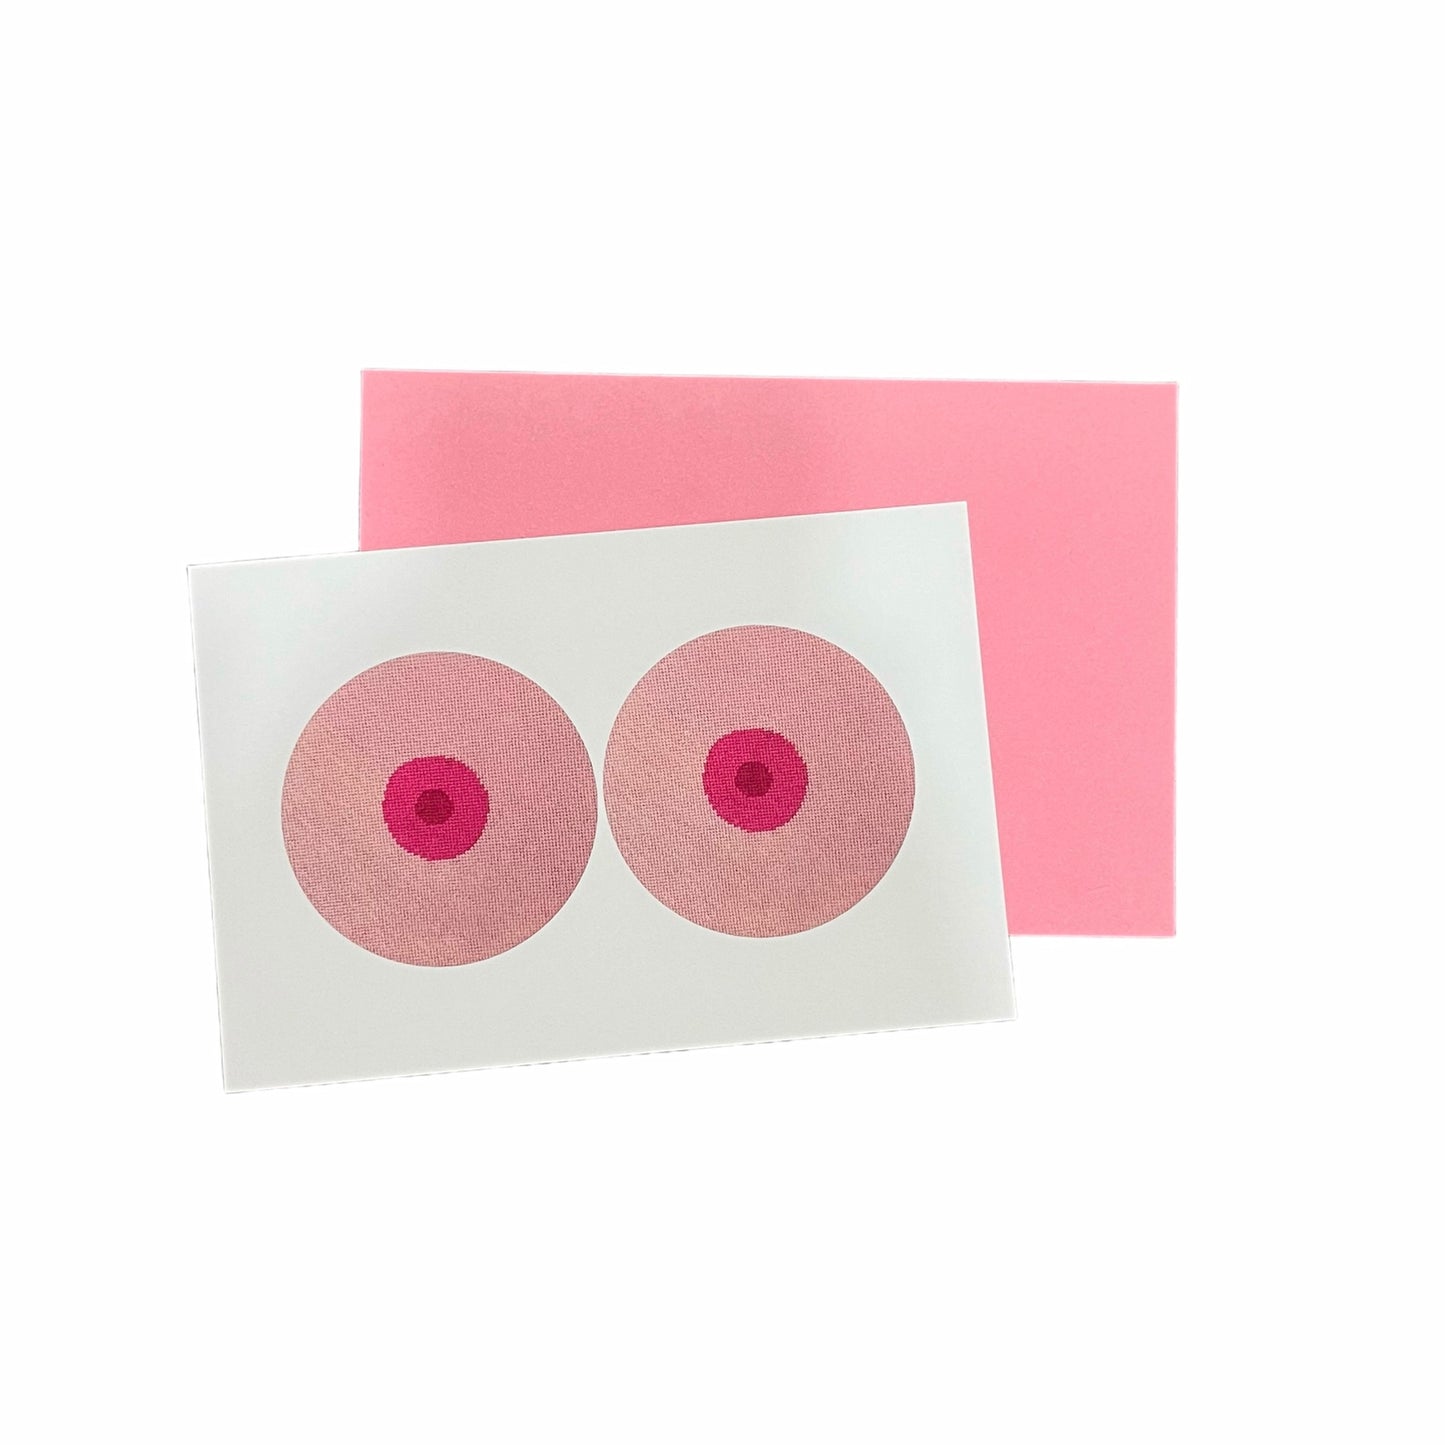 THE GIRLS pink notecard